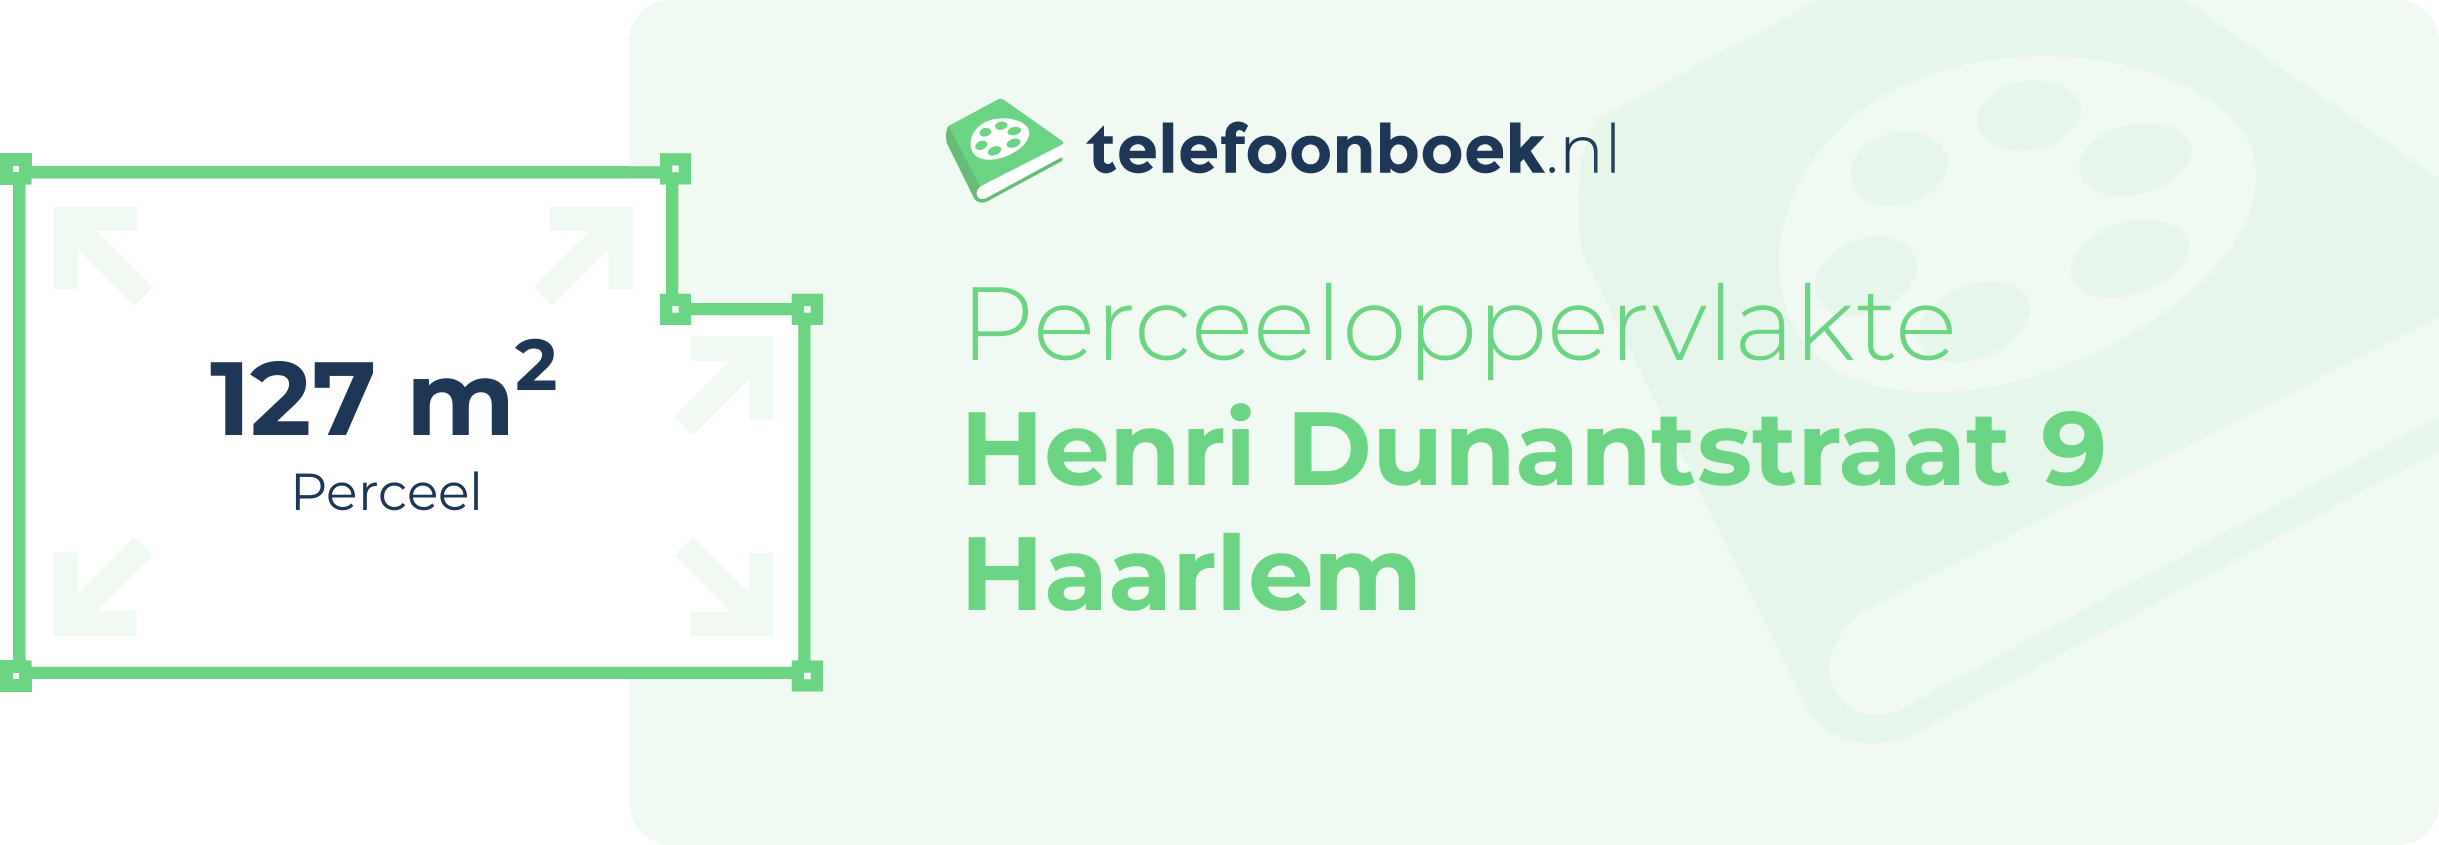 Perceeloppervlakte Henri Dunantstraat 9 Haarlem